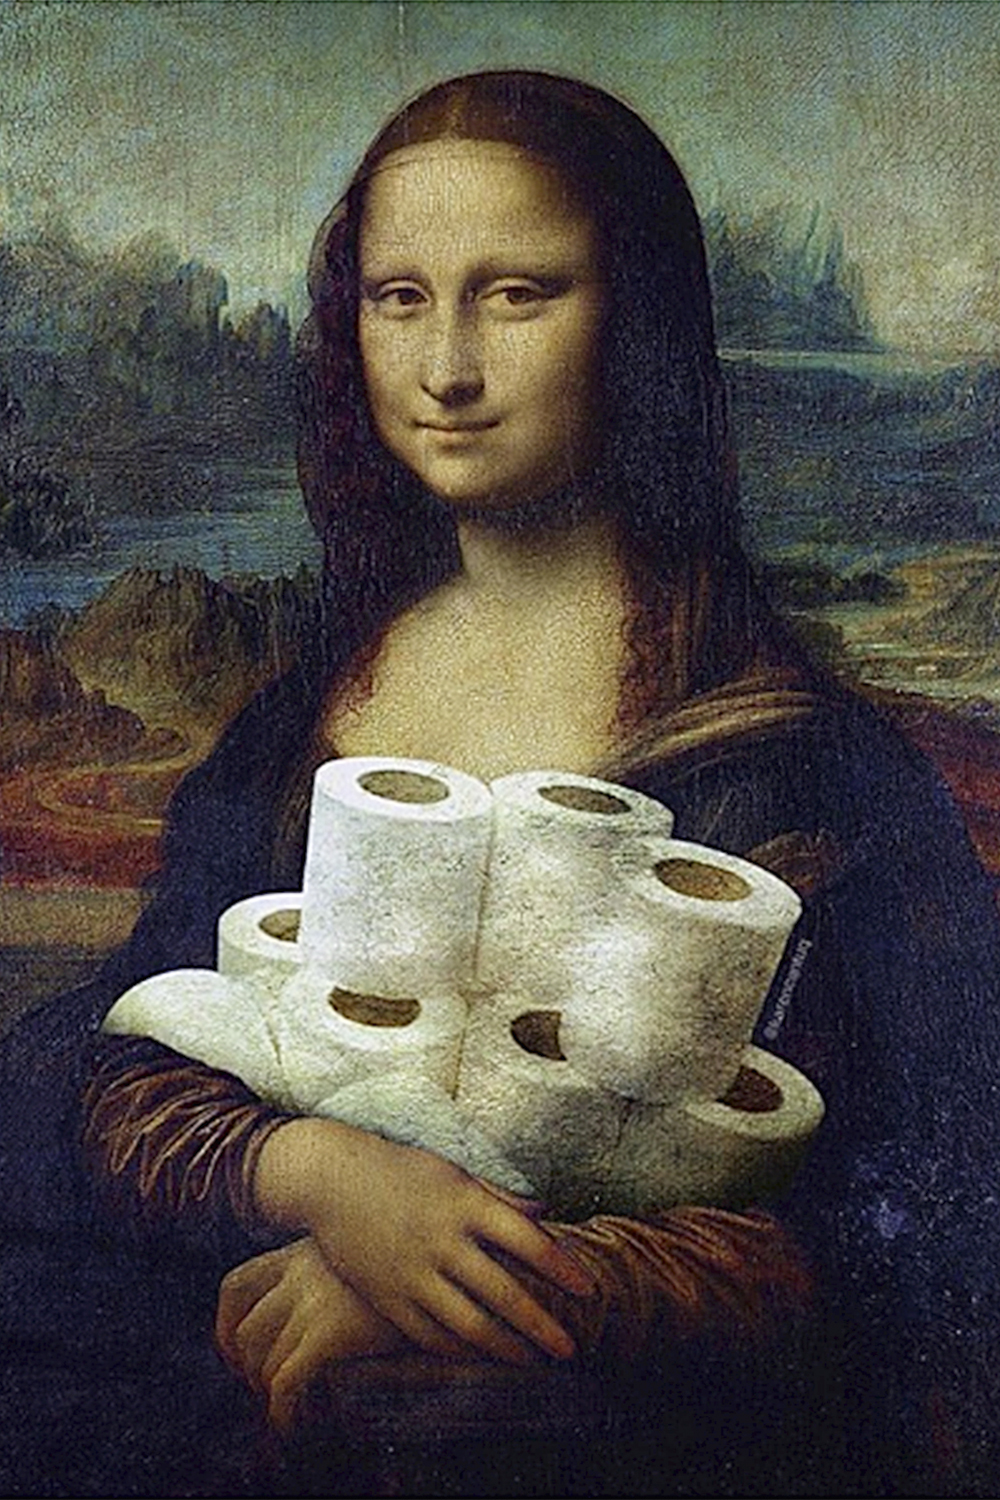 MONA LISA, de Leonardo da Vinci: estoque de papel higiênico.